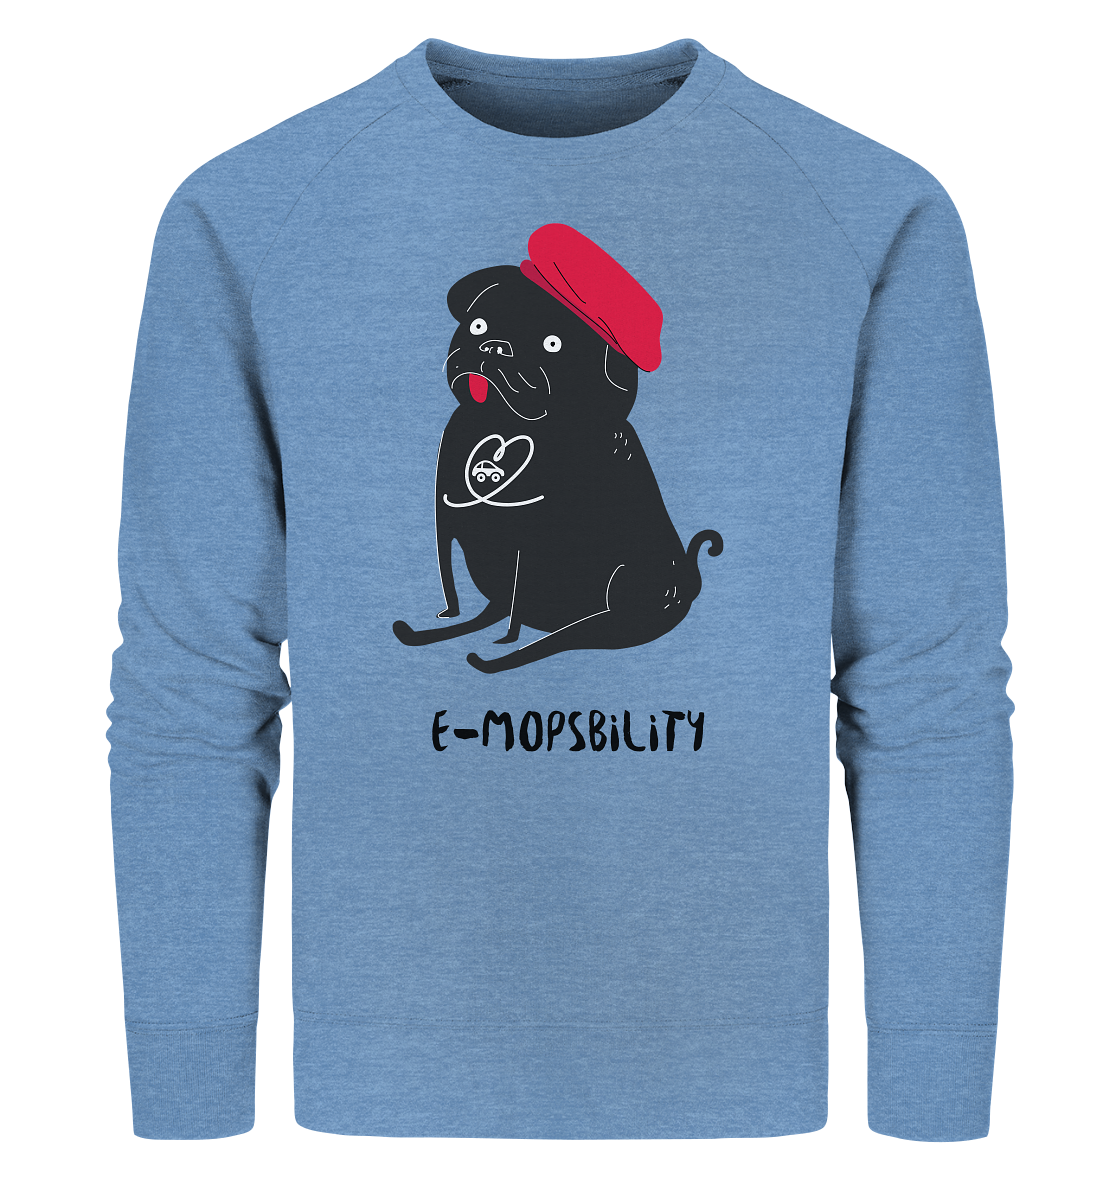 E-Mopsbility ORGANIC - Organic Sweatshirt